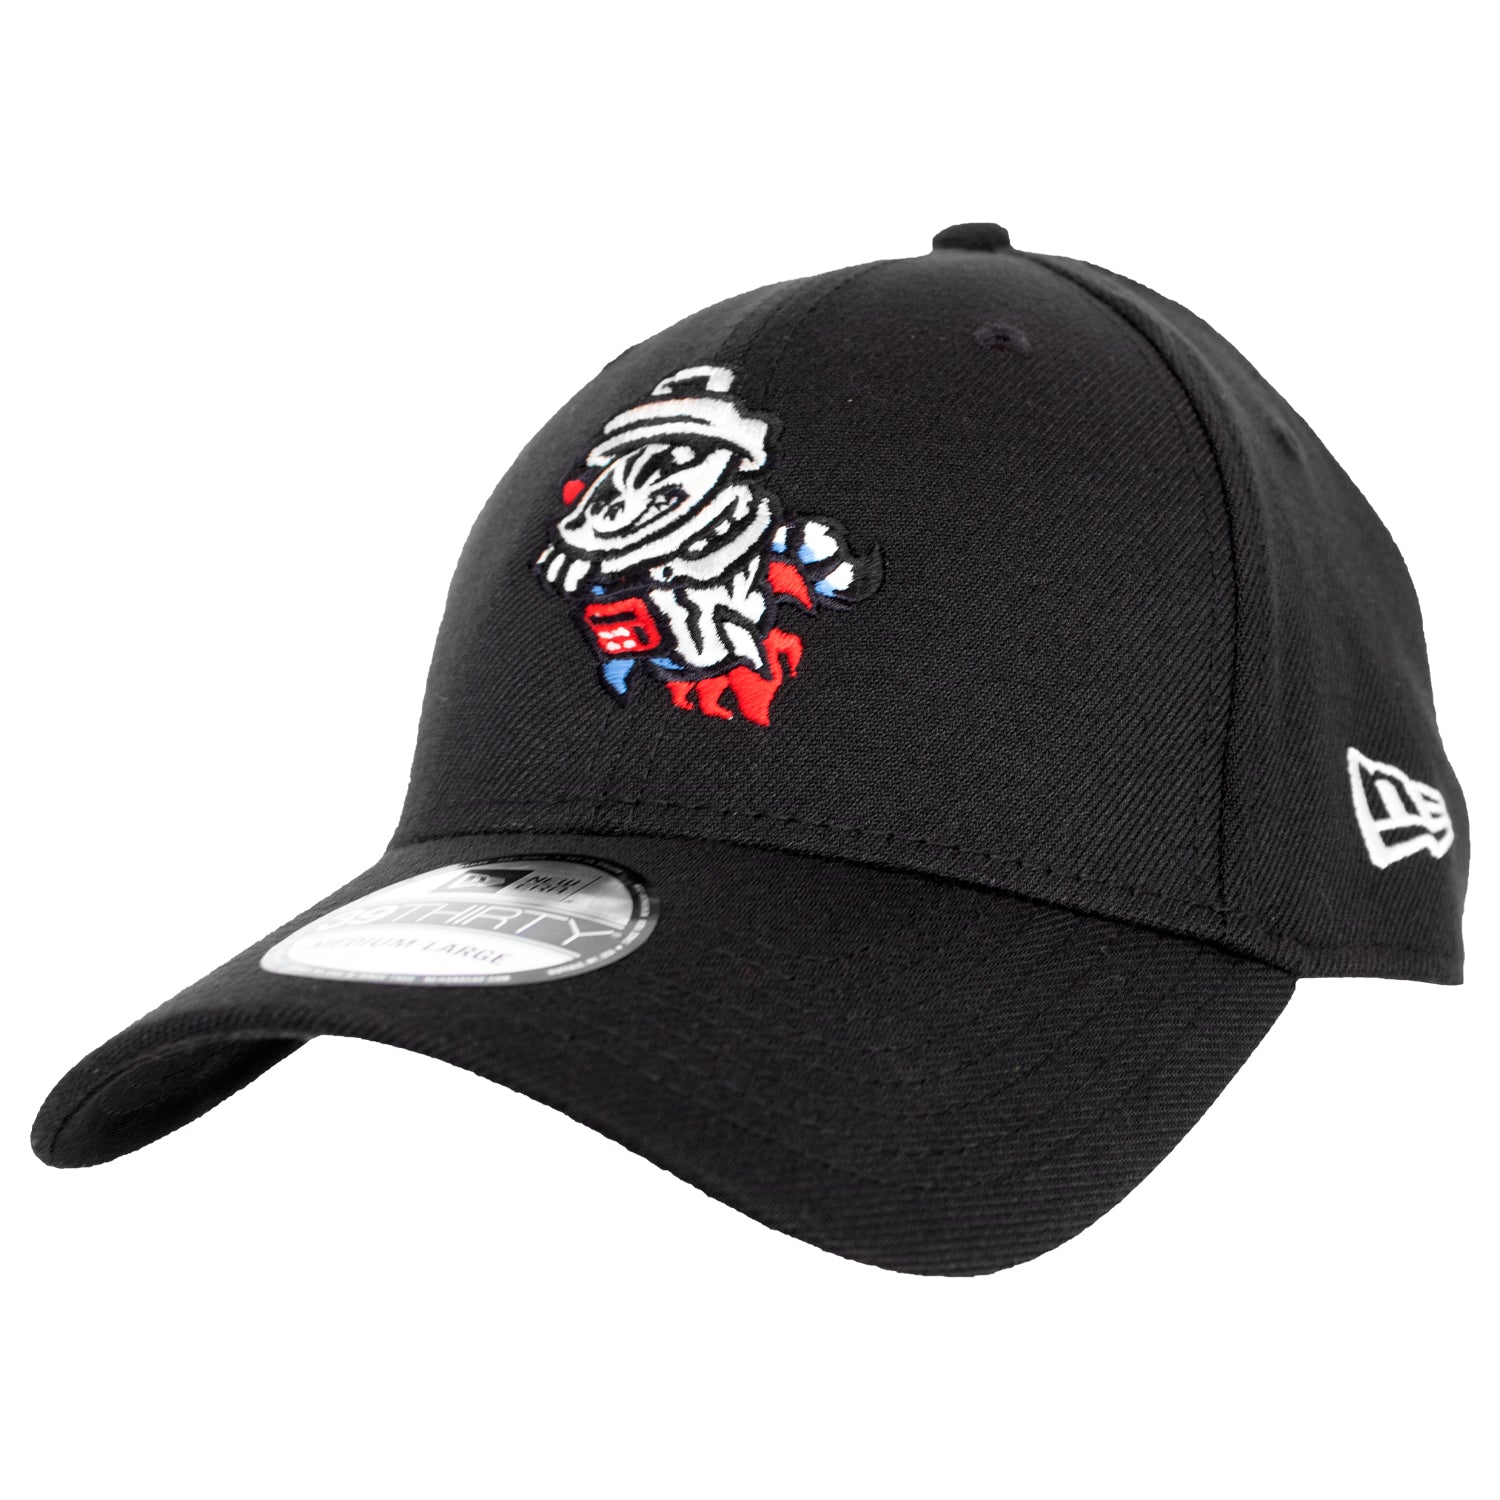 Dressing Up The Humble Baseball Cap – SamTalksStyle